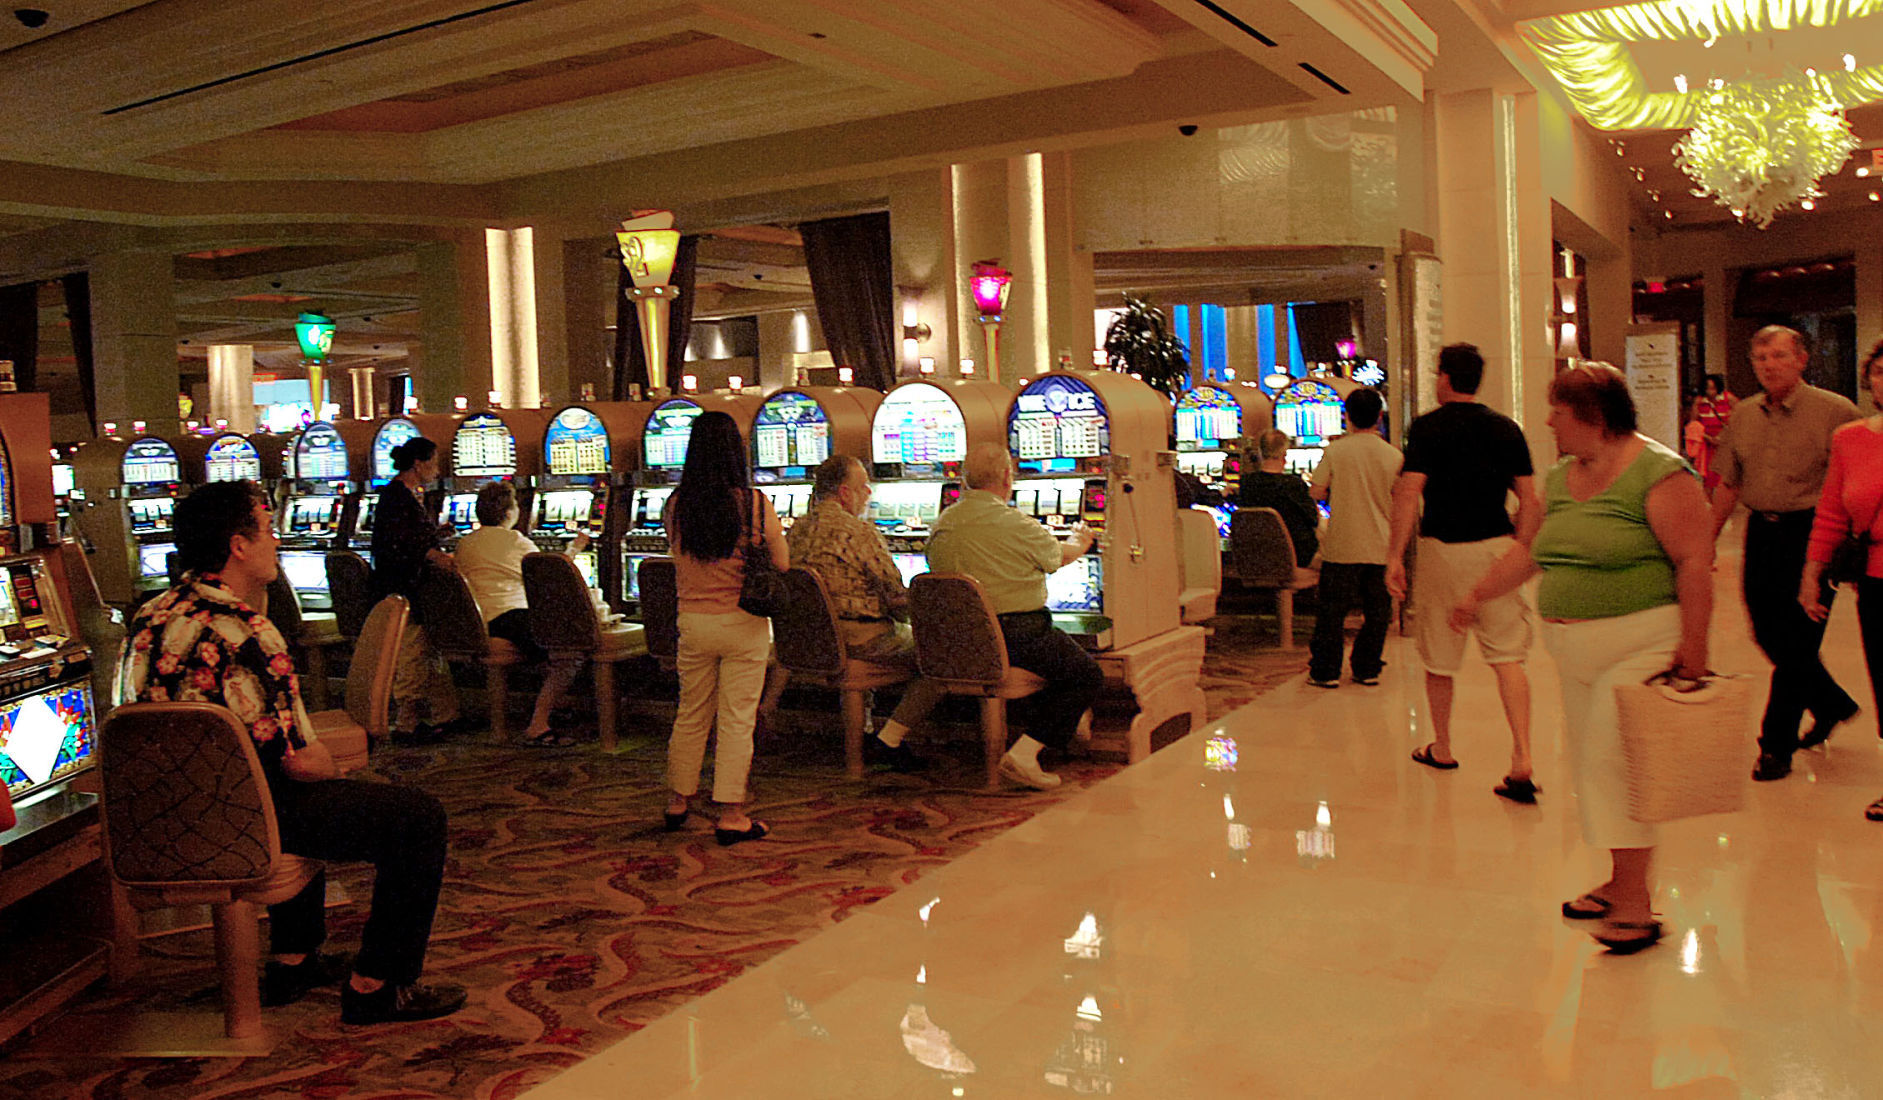 will las vegas casinos shut down again